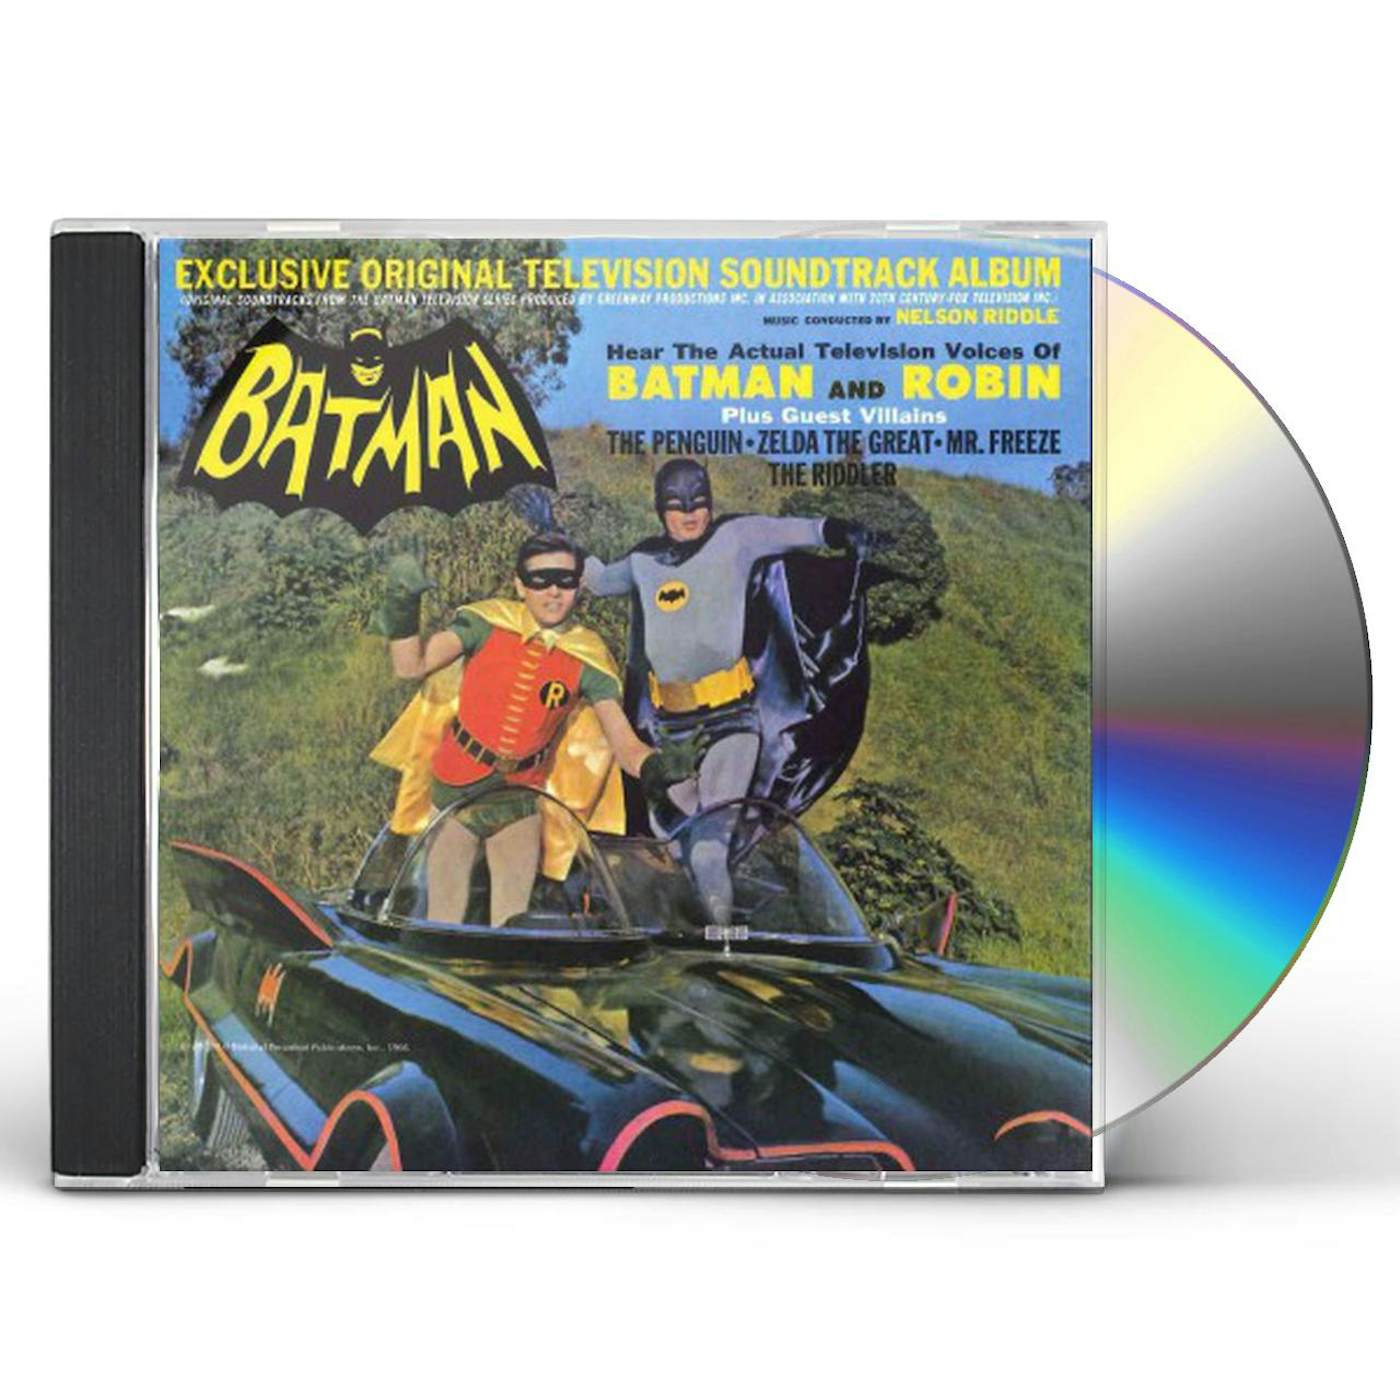 Nelson Riddle BATMAN - TV Original Soundtrack CD